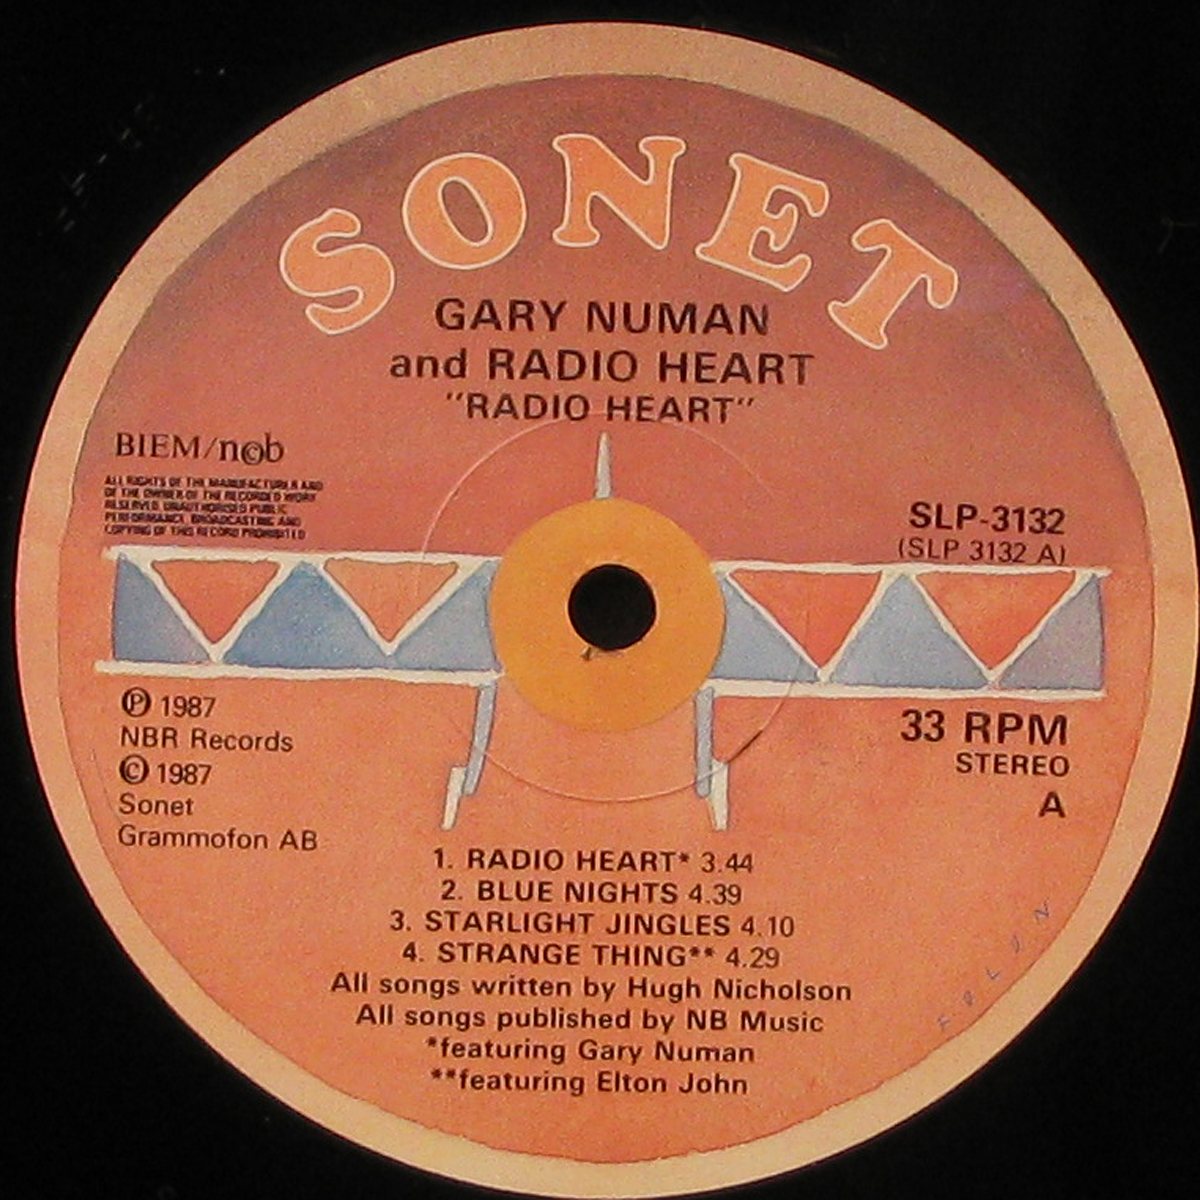 LP Radio Heart Featuring Gary Numan — Radio Heart фото 2